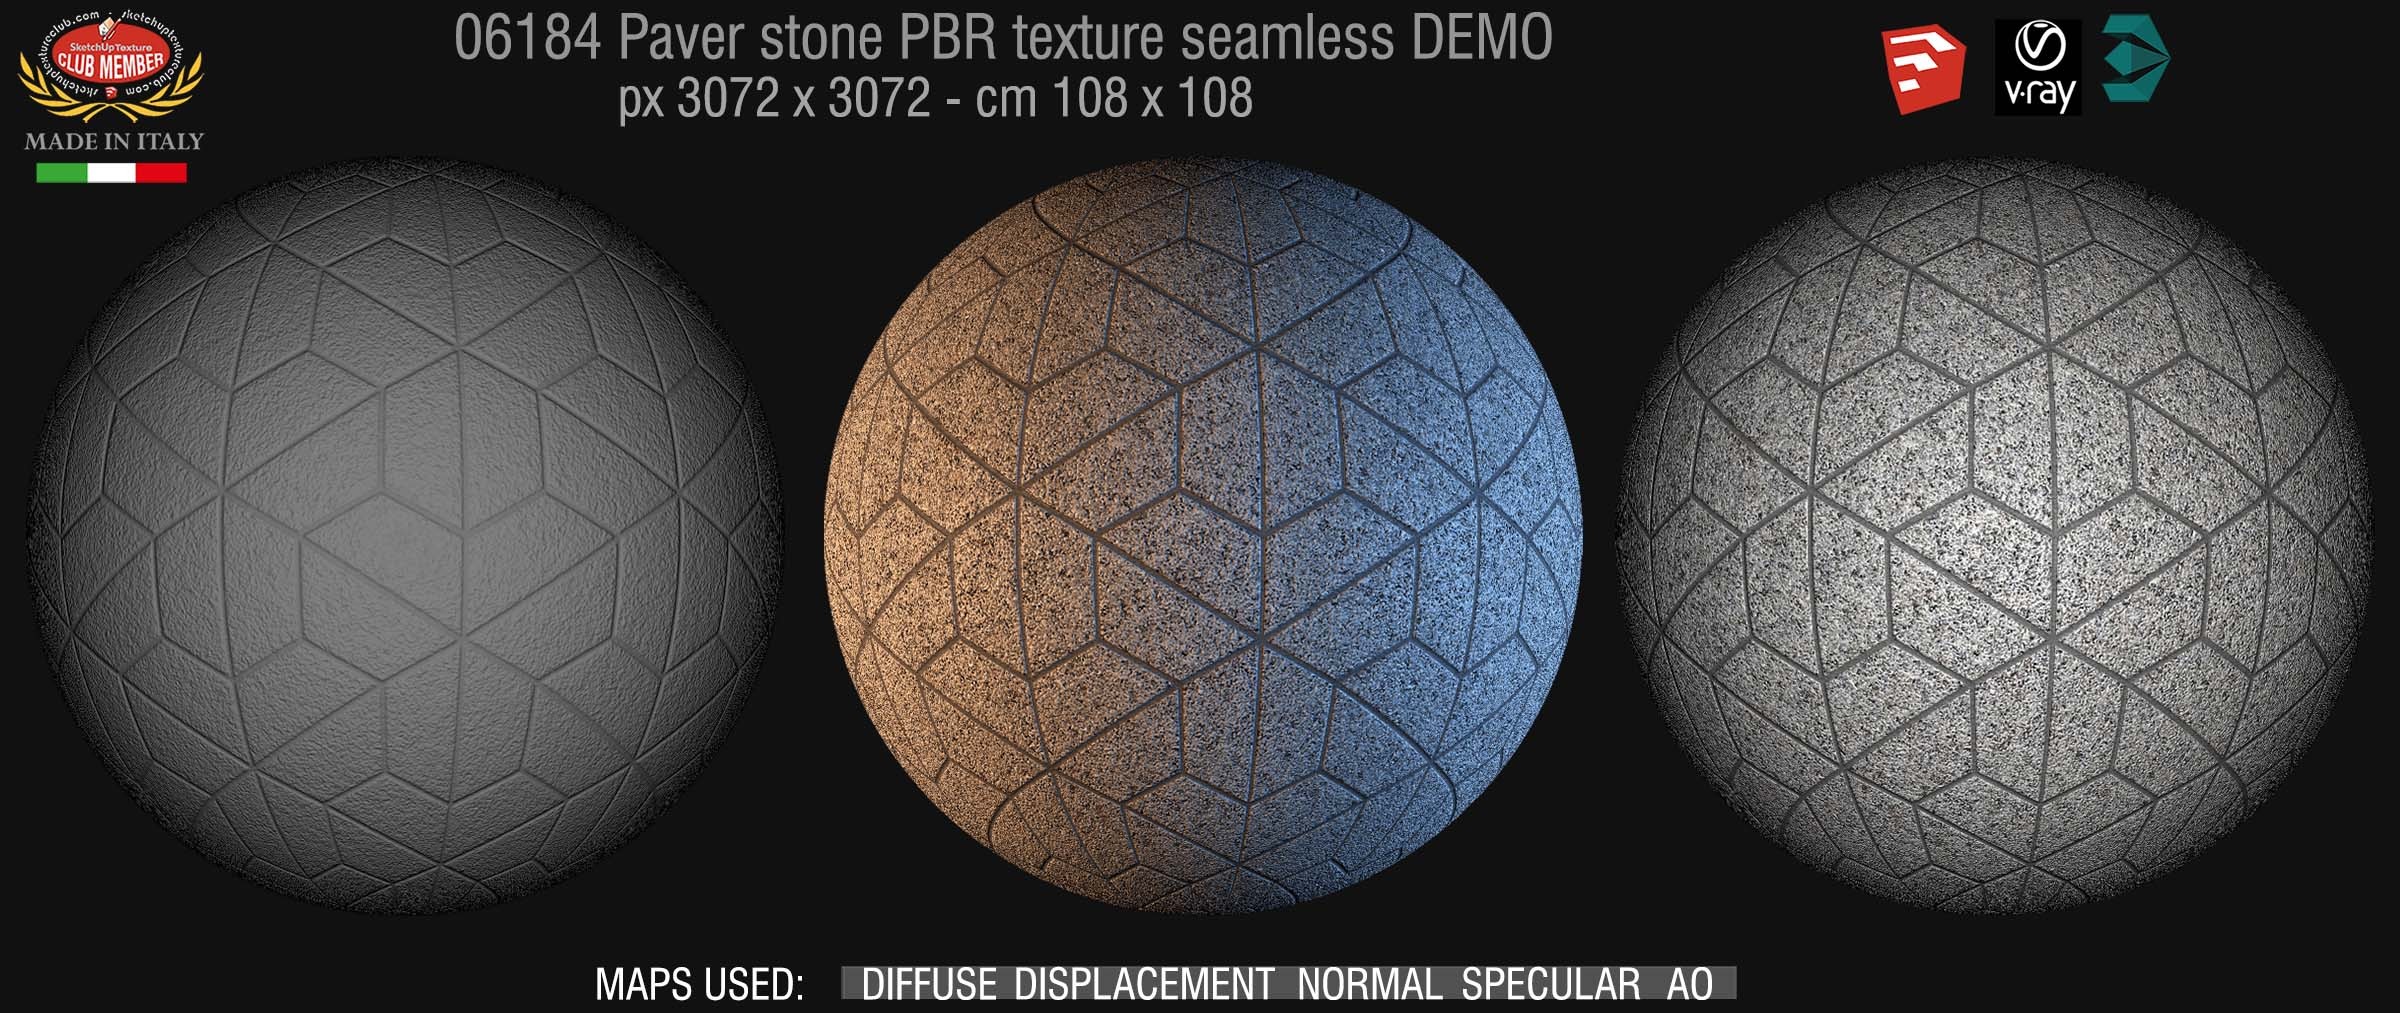 06184 Pavers stone PBR texture seamless DEMO